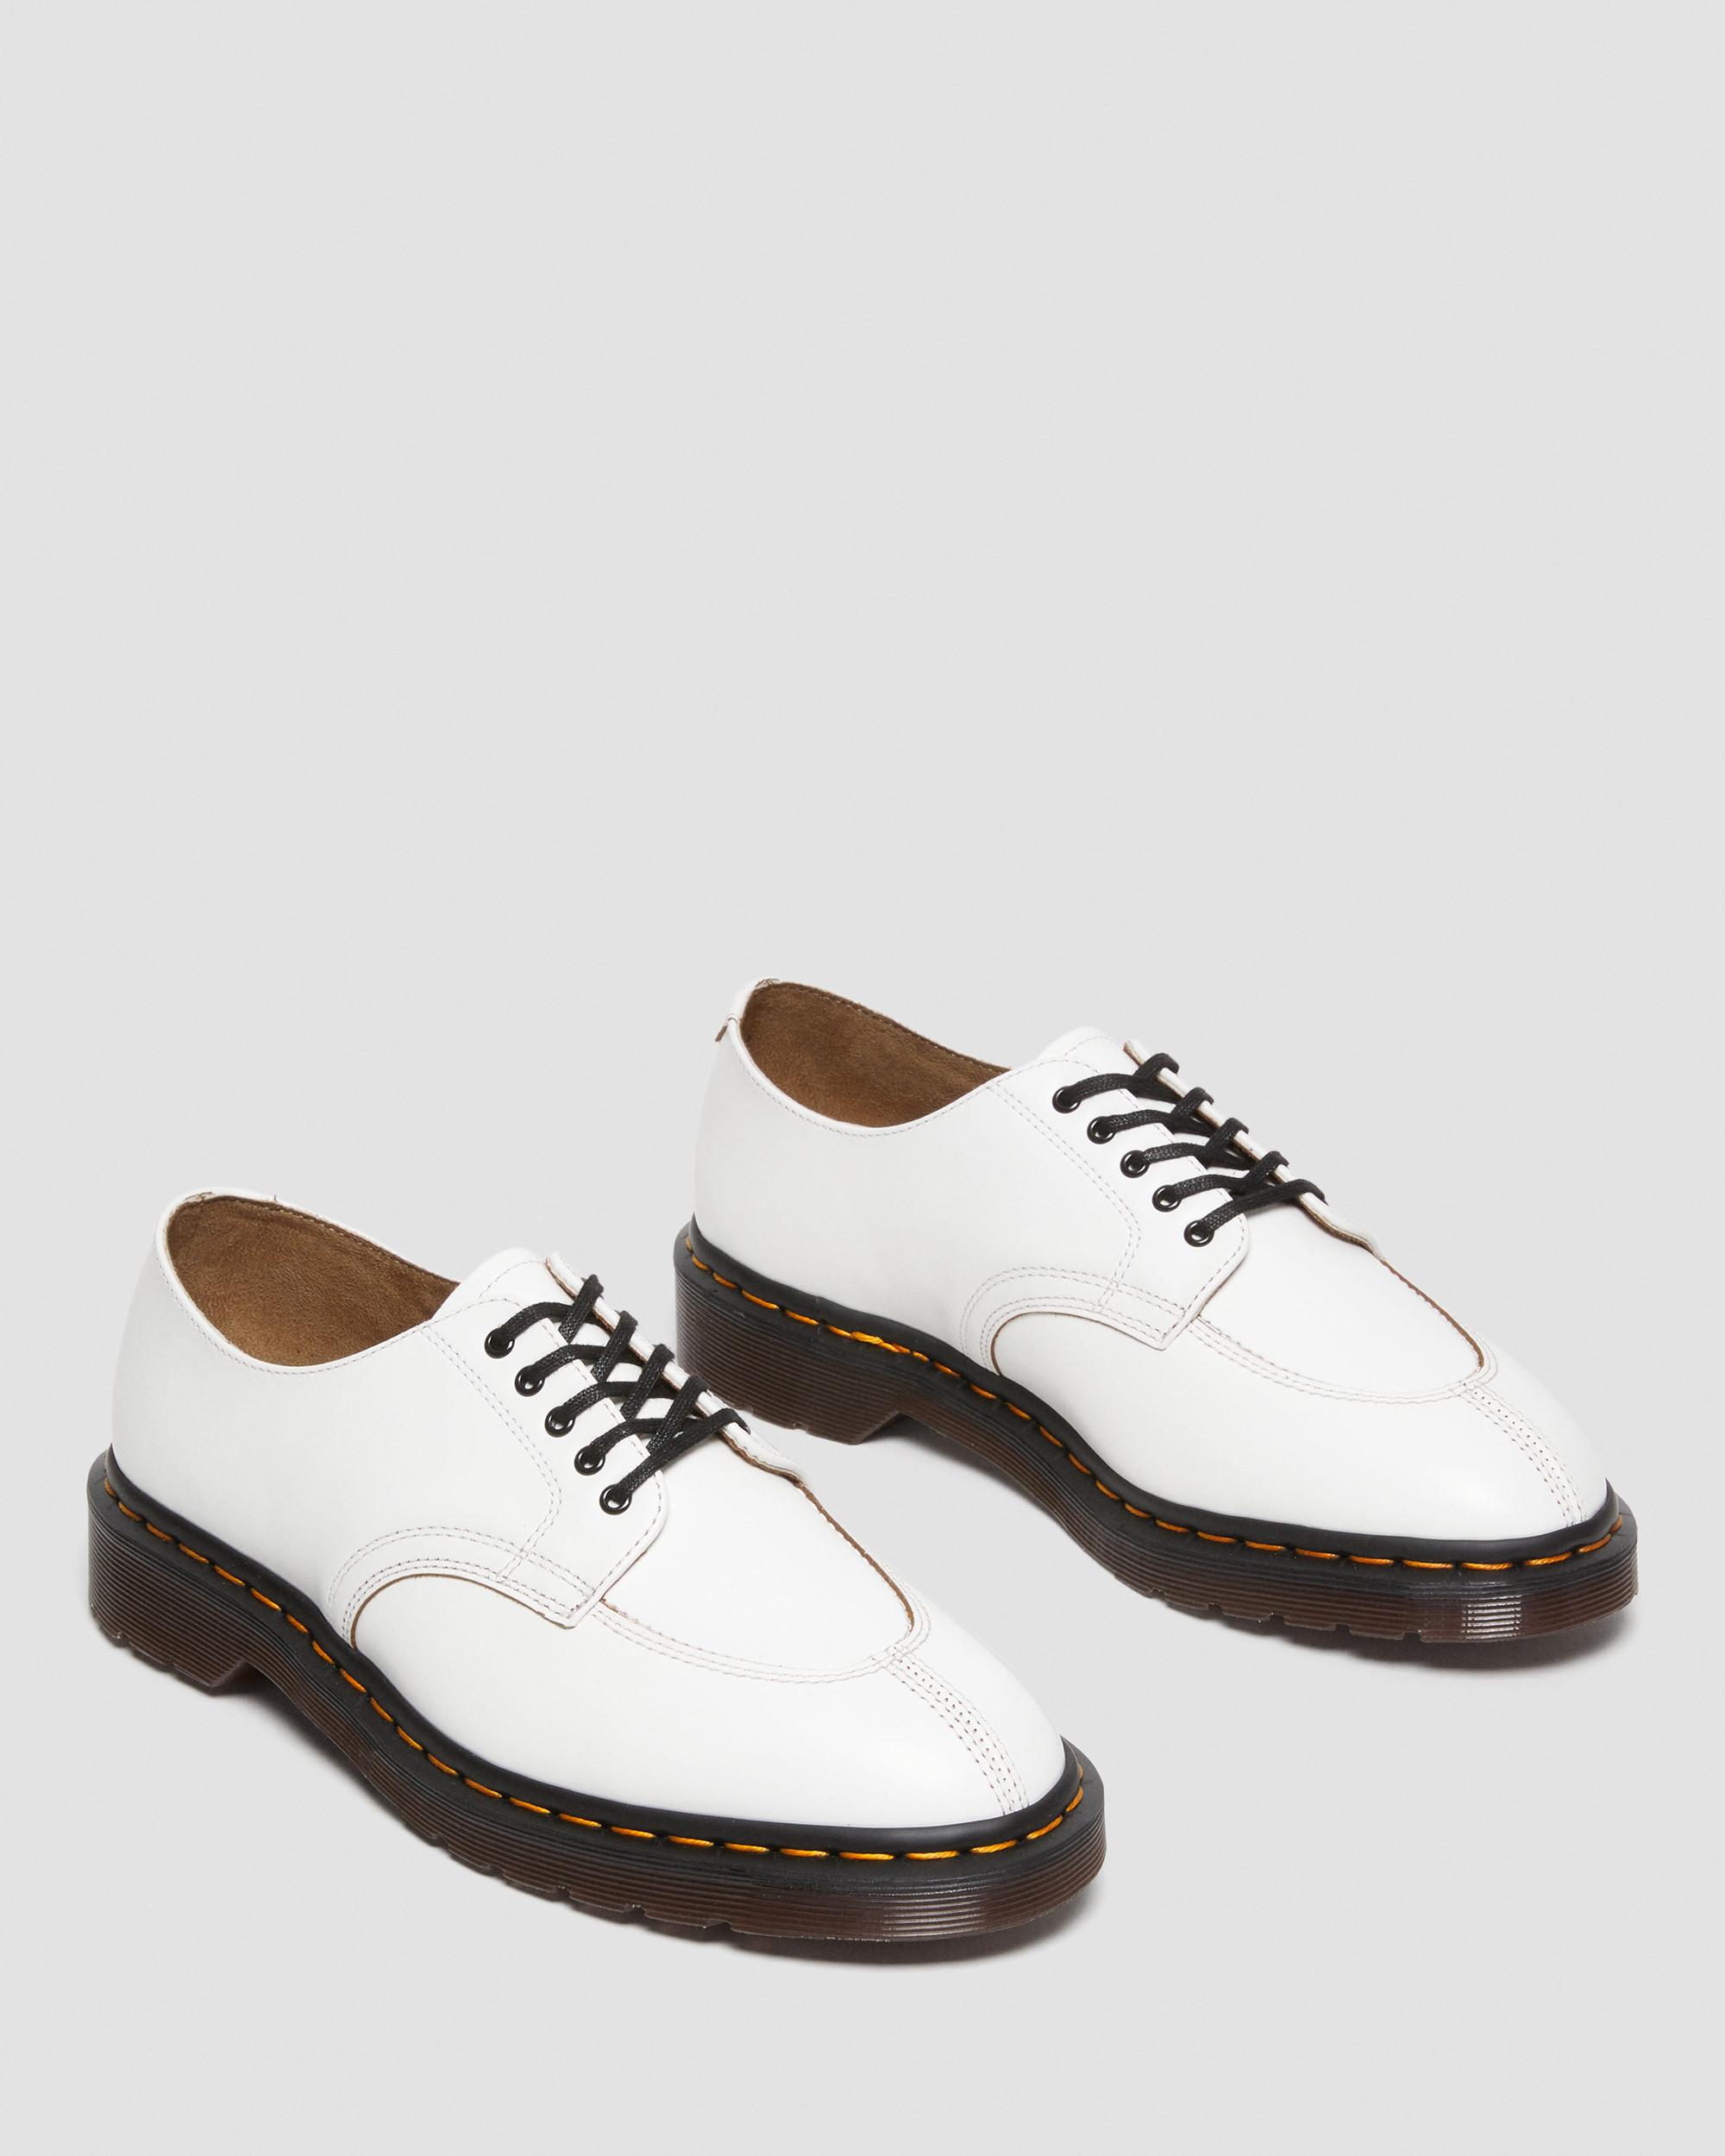 2046 Vintage Smooth Leather Oxford ShoesChaussures 2046 Vintage en cuir Smooth Dr. Martens